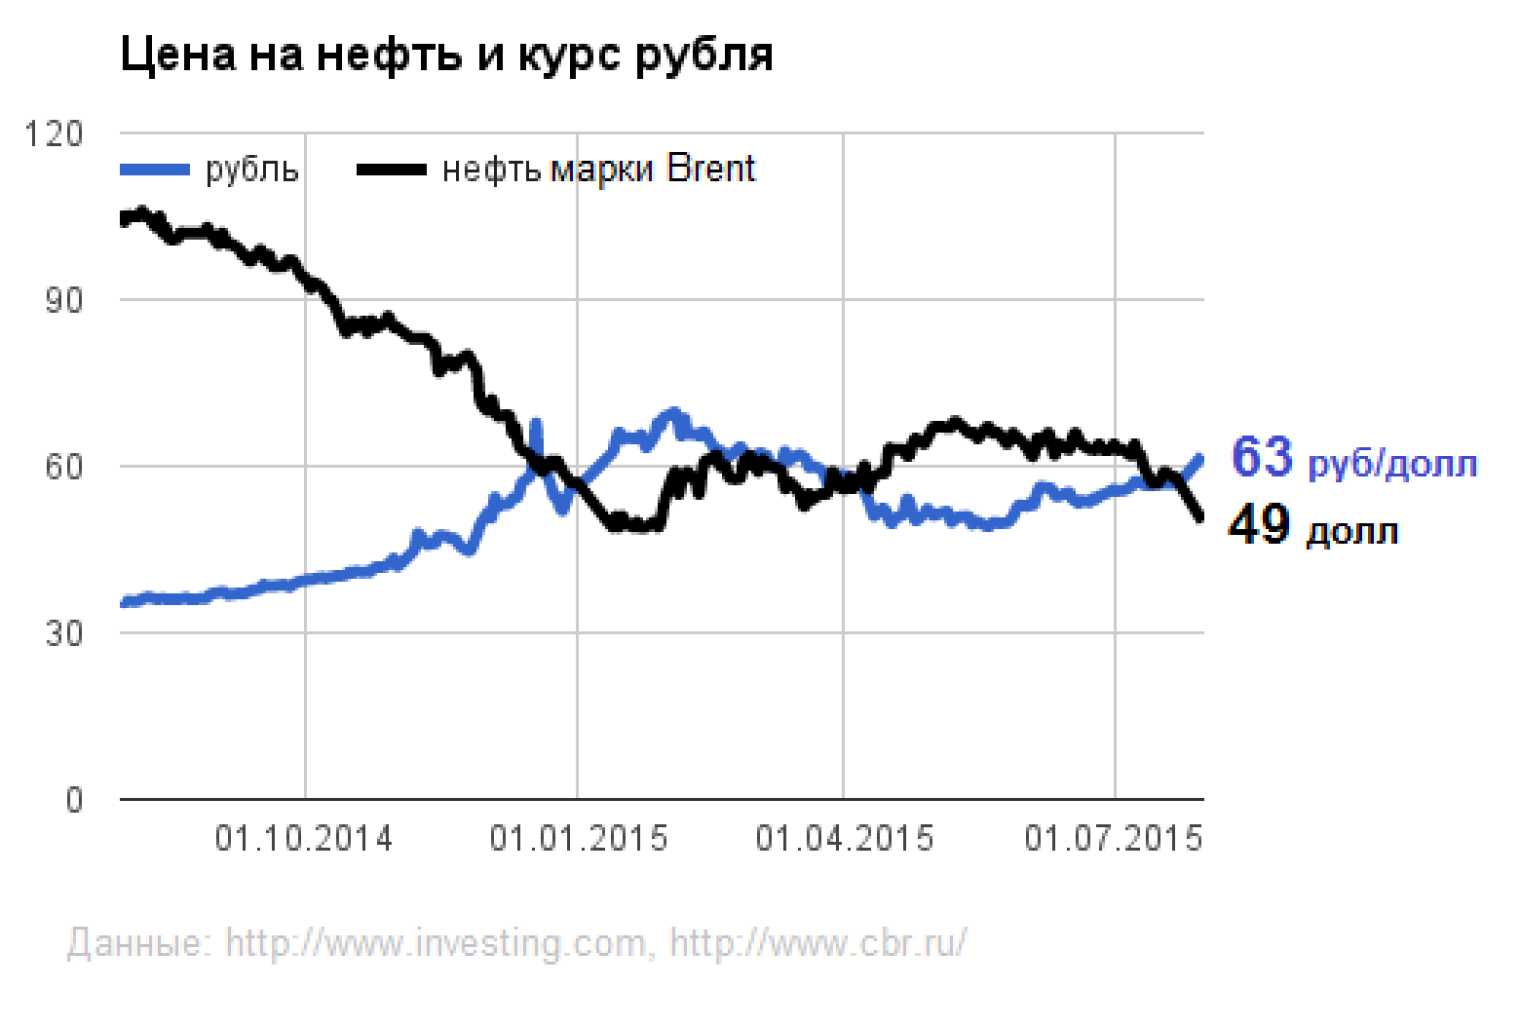 Курс рубля. Нефть в рублях график. Курс рубля и стоимость нефти график. Стоимость нефти в рублях график.